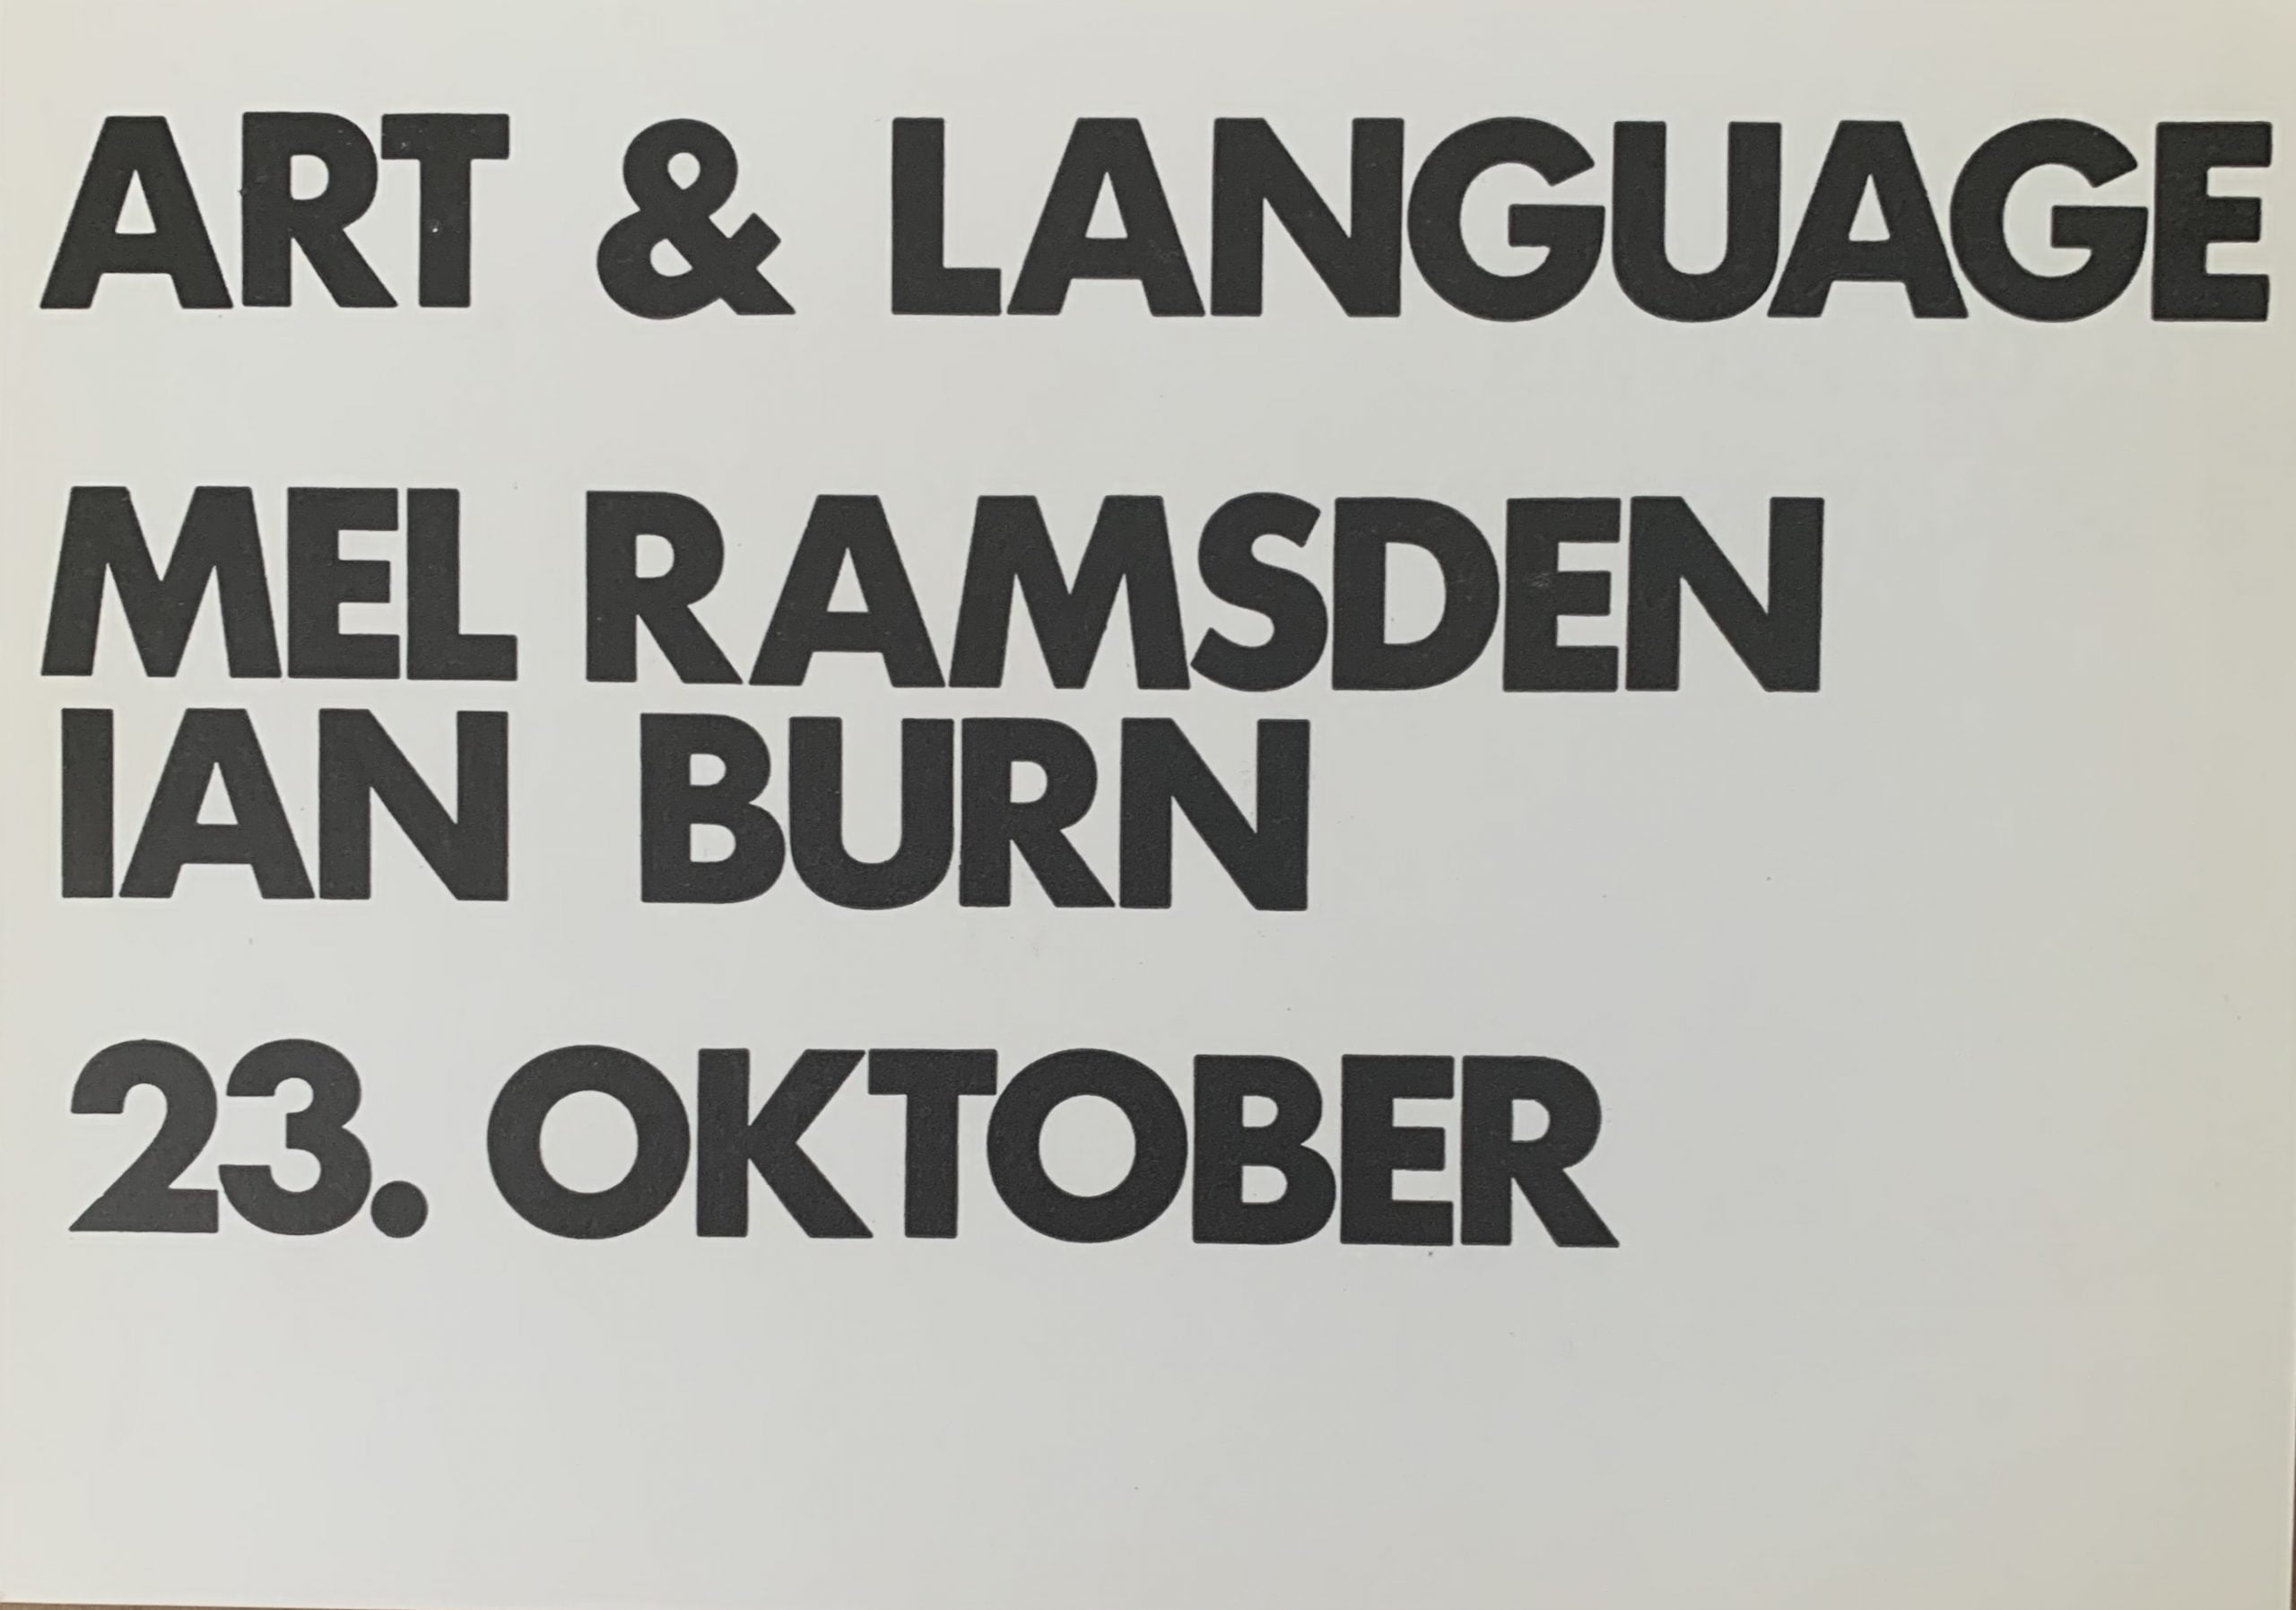 ART & LANGUAGE, MEL RAMSDEN, IAN BURN 23. OKTOBER. 1973. - Unoriginal Sins